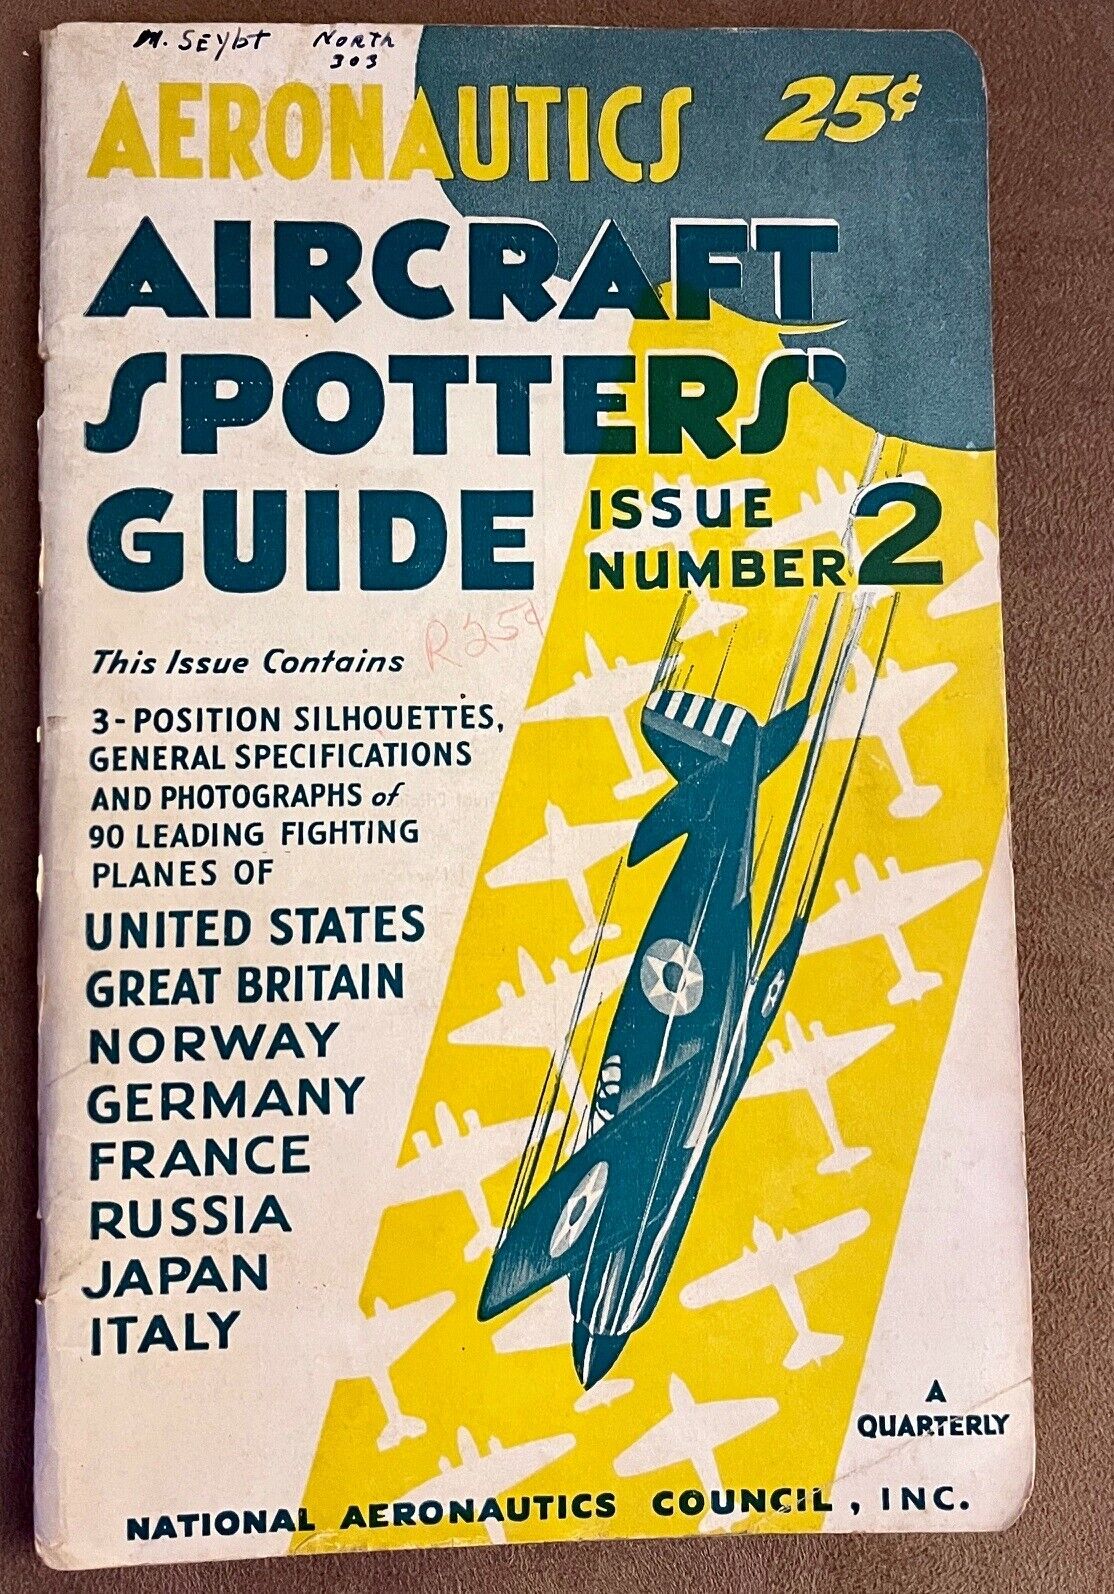 Vtg Airplane WWII 1940s Aircraft Spotters Guide Volume 2 Aeronautics Quarterly